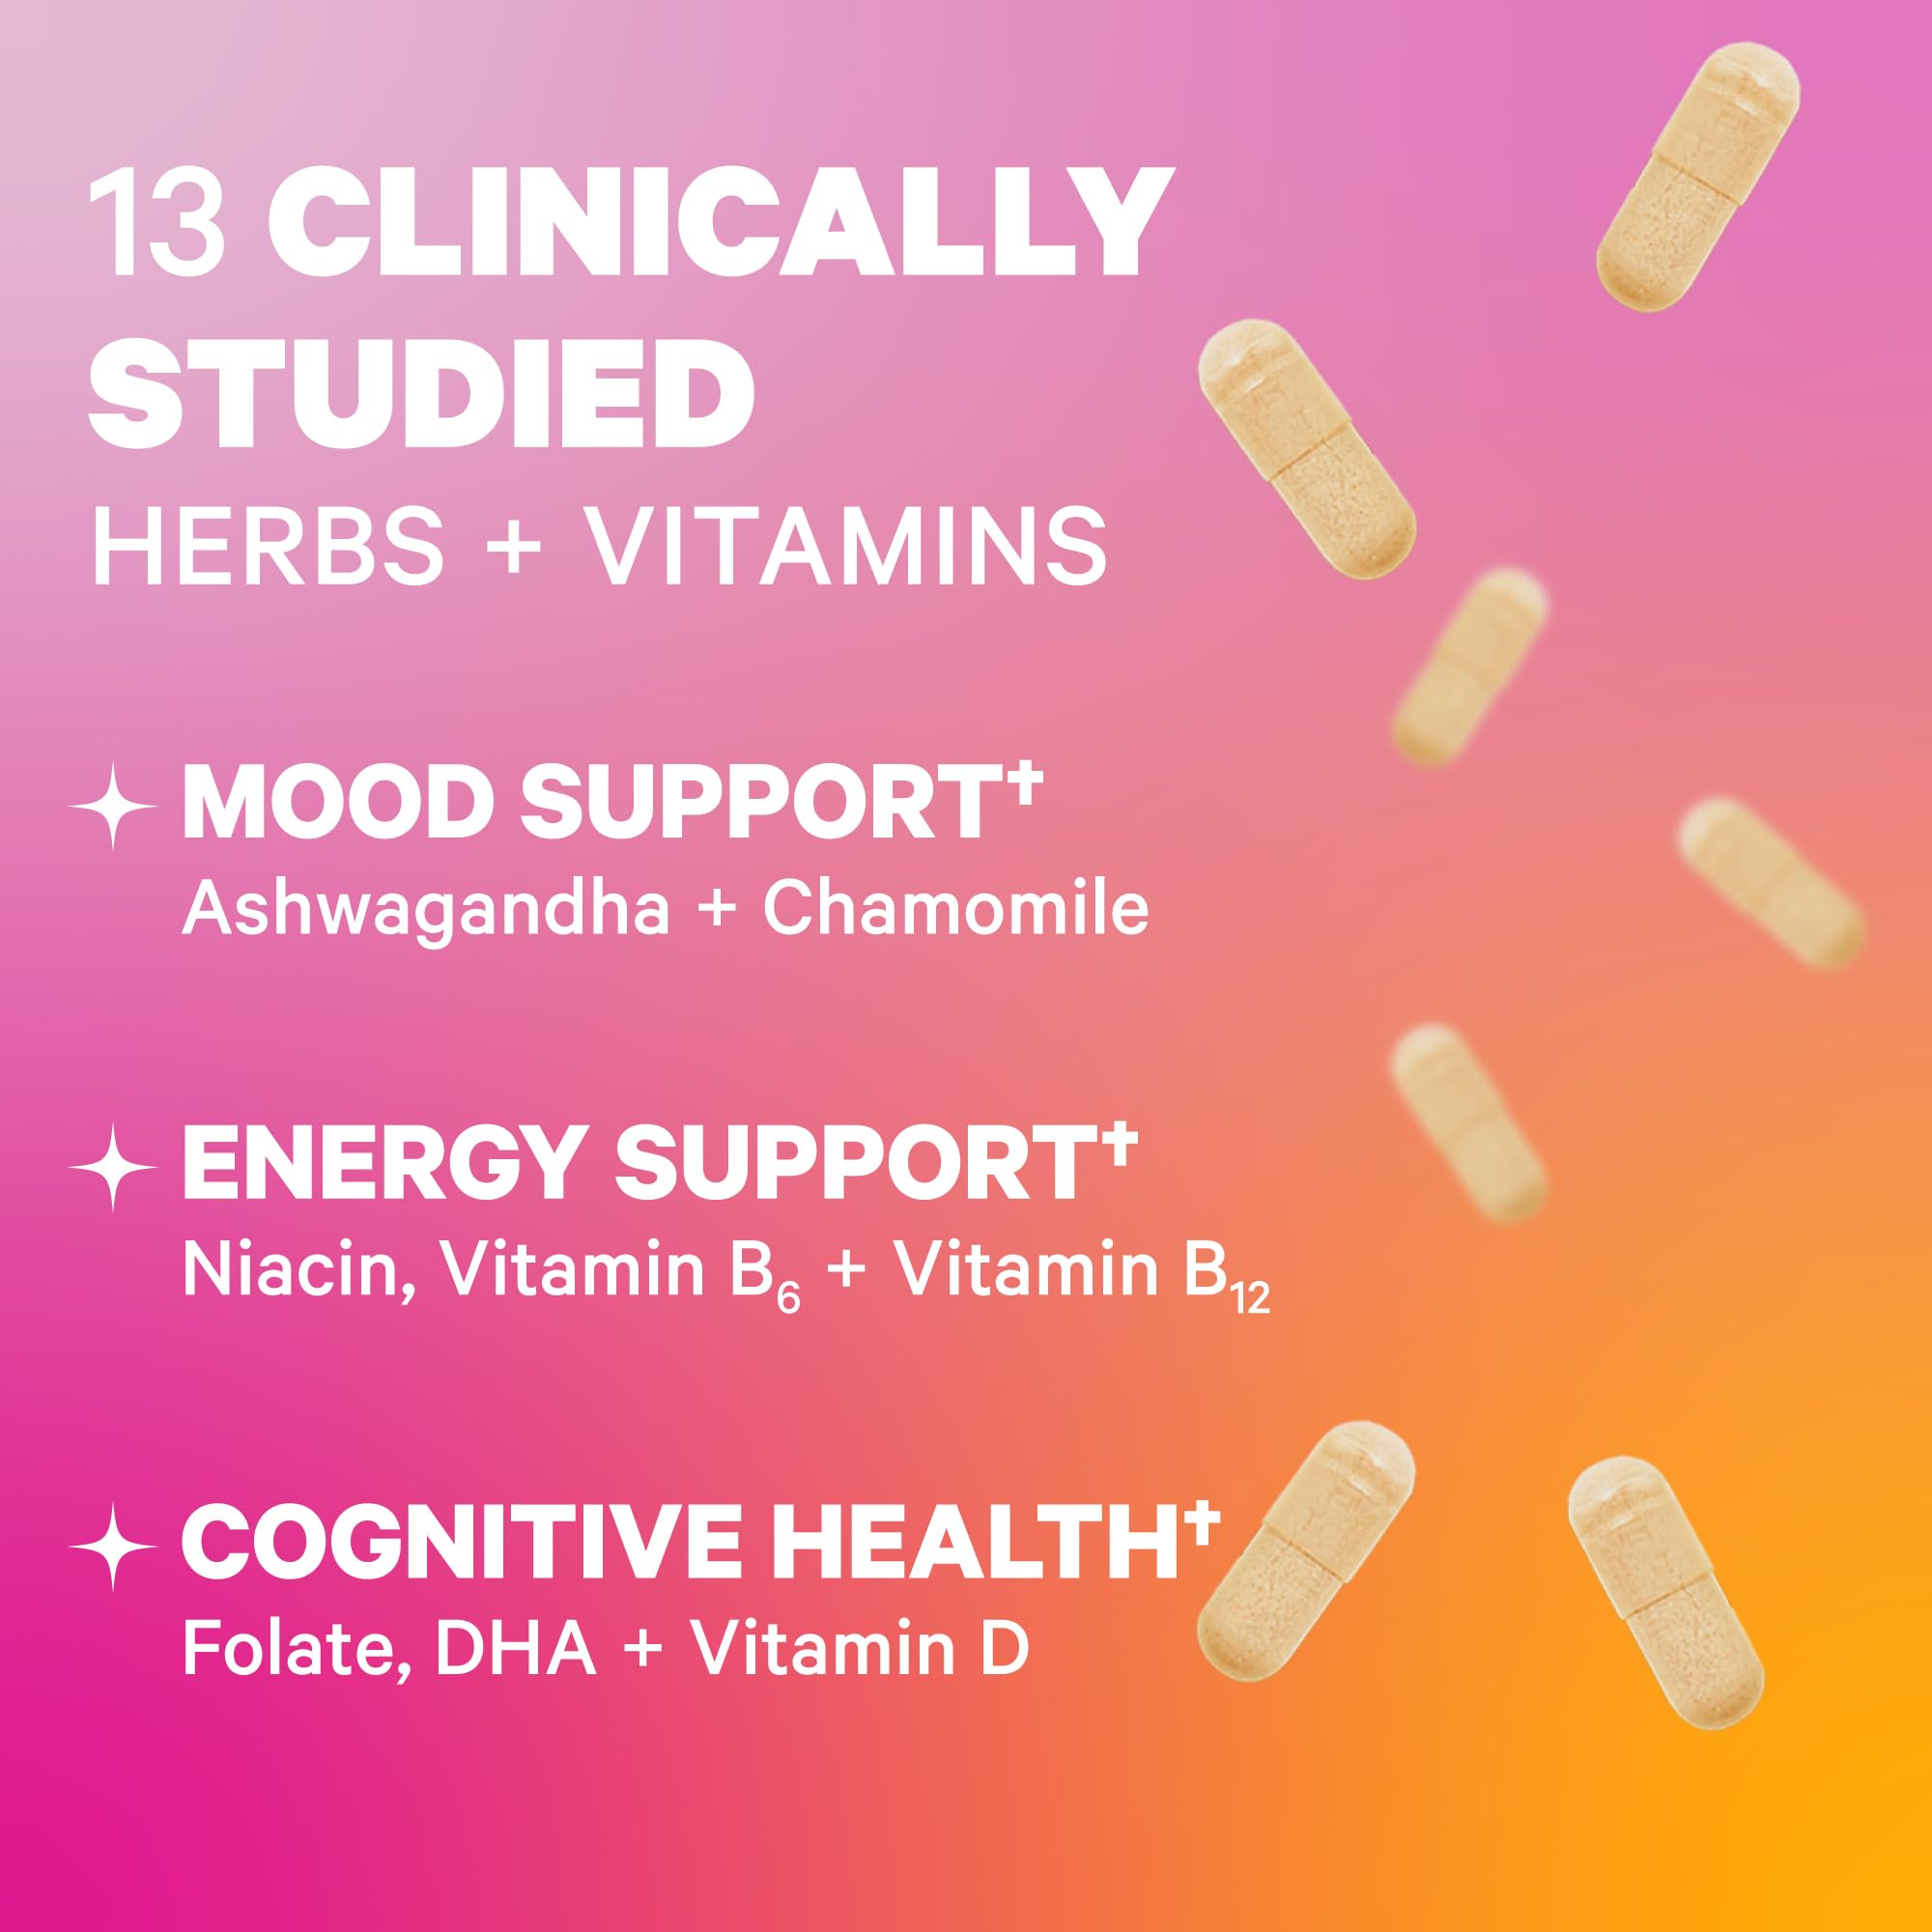 Pink Stork Postpartum Mood Support Supplement with Ashwagandha, Vitamin D and Vitamin B12, Postnatal Vitamins to Support Hormone Balance for Women, Postpartum Essentials - 60 Capsules